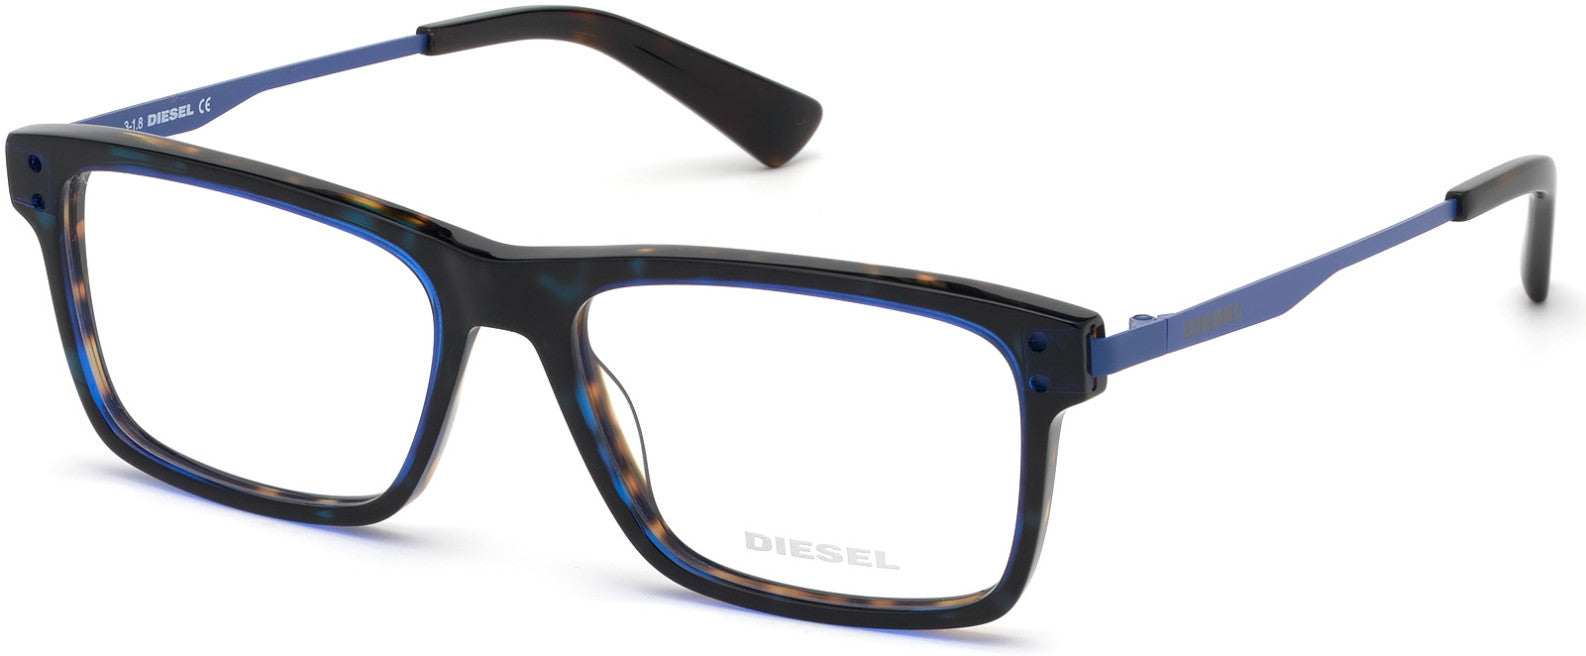 Diesel DL5296 Rectangular Eyeglasses 056-056 - Havana